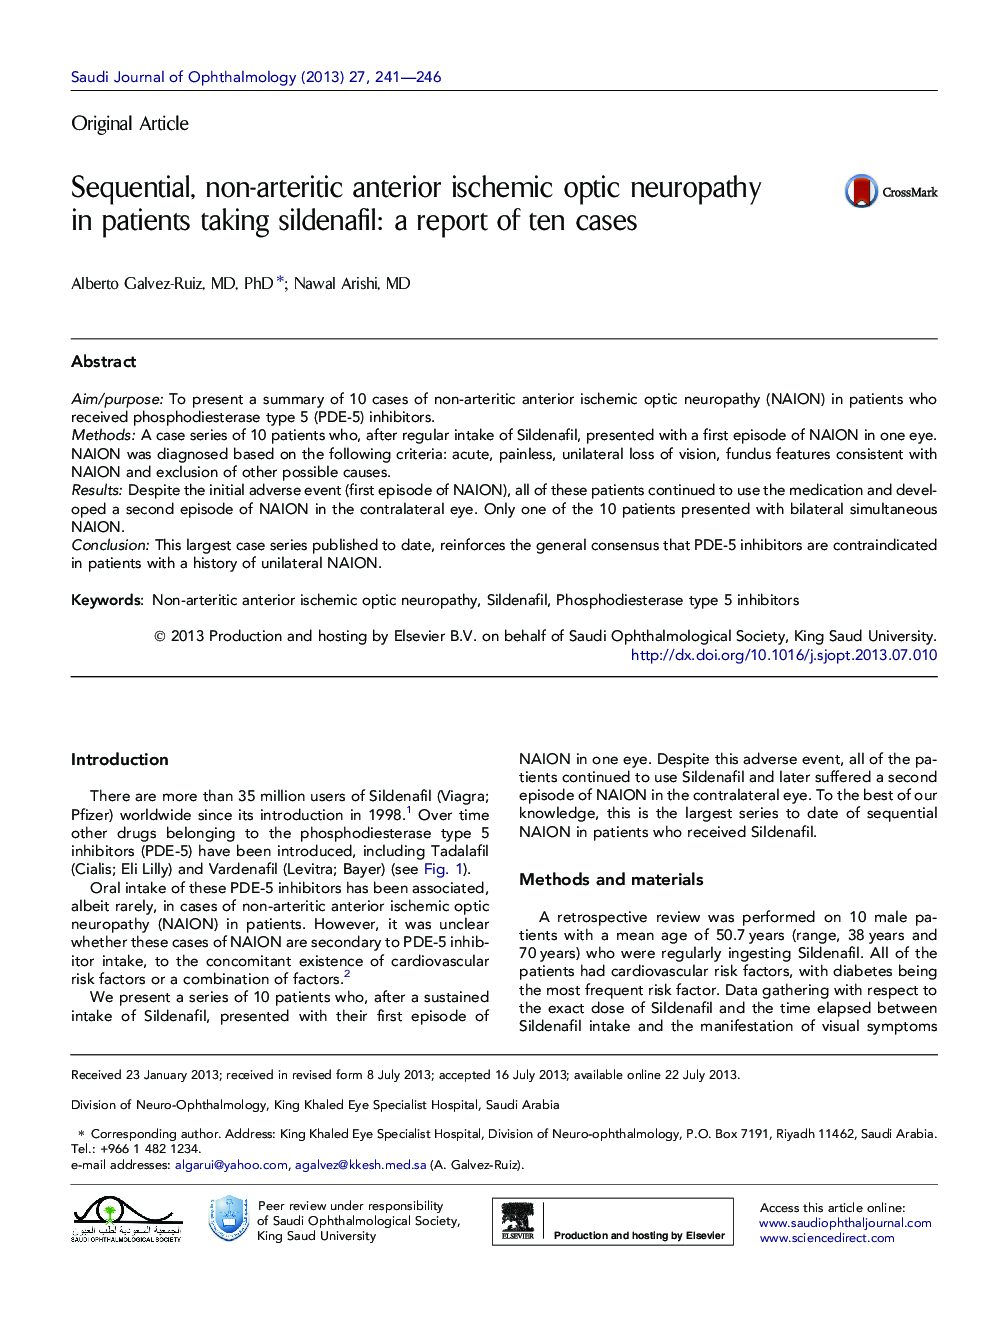 Sequential, non-arteritic anterior ischemic optic neuropathy in patients taking sildenafil: a report of ten cases 